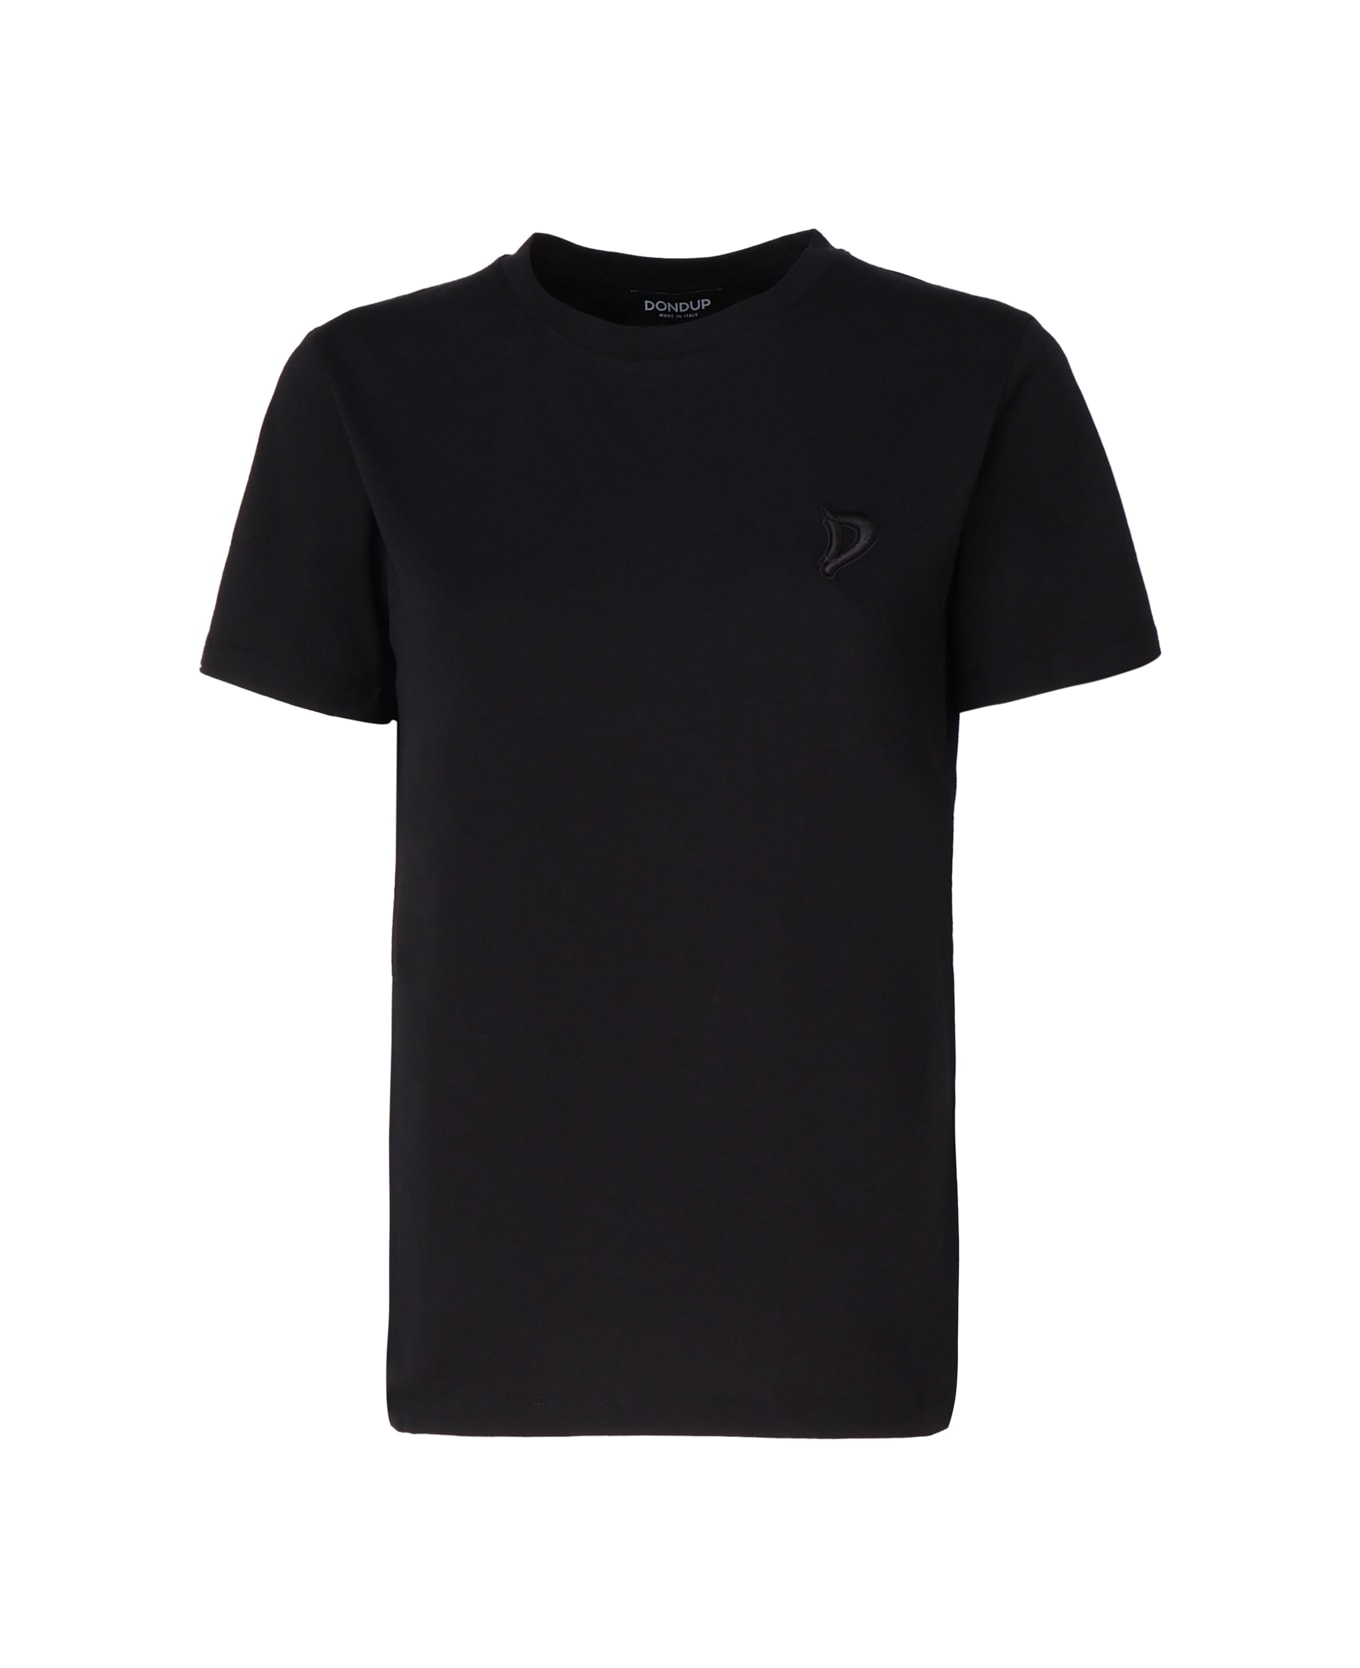 Dondup Cotton T-shirt - Black